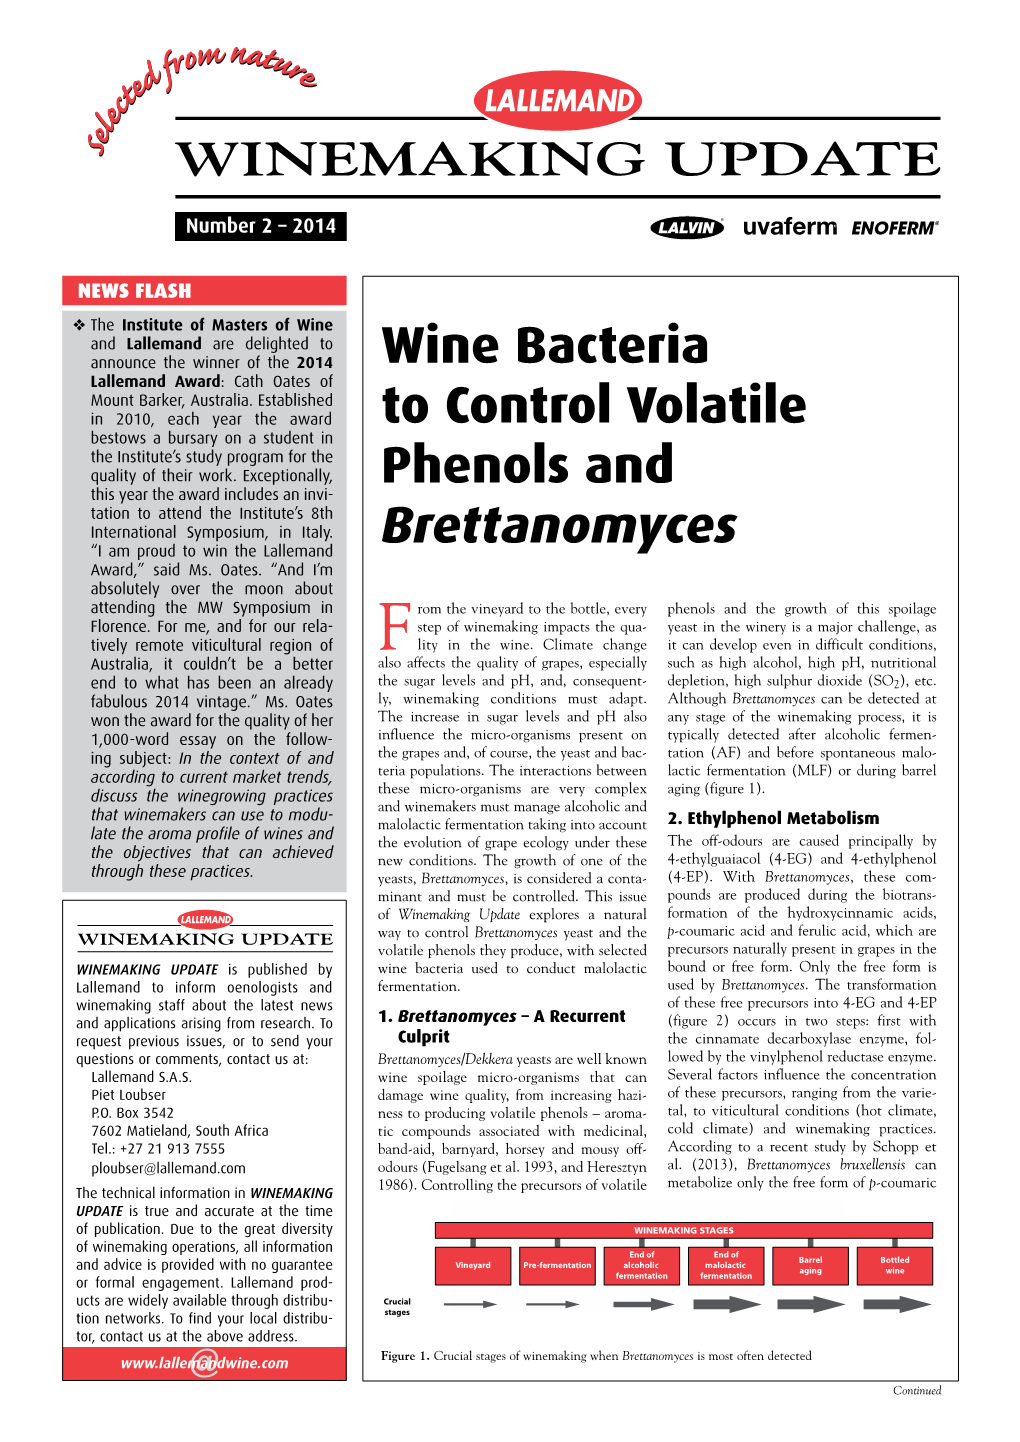 Wine Bacteria to Control Volatile Phenols and Brettanomyces